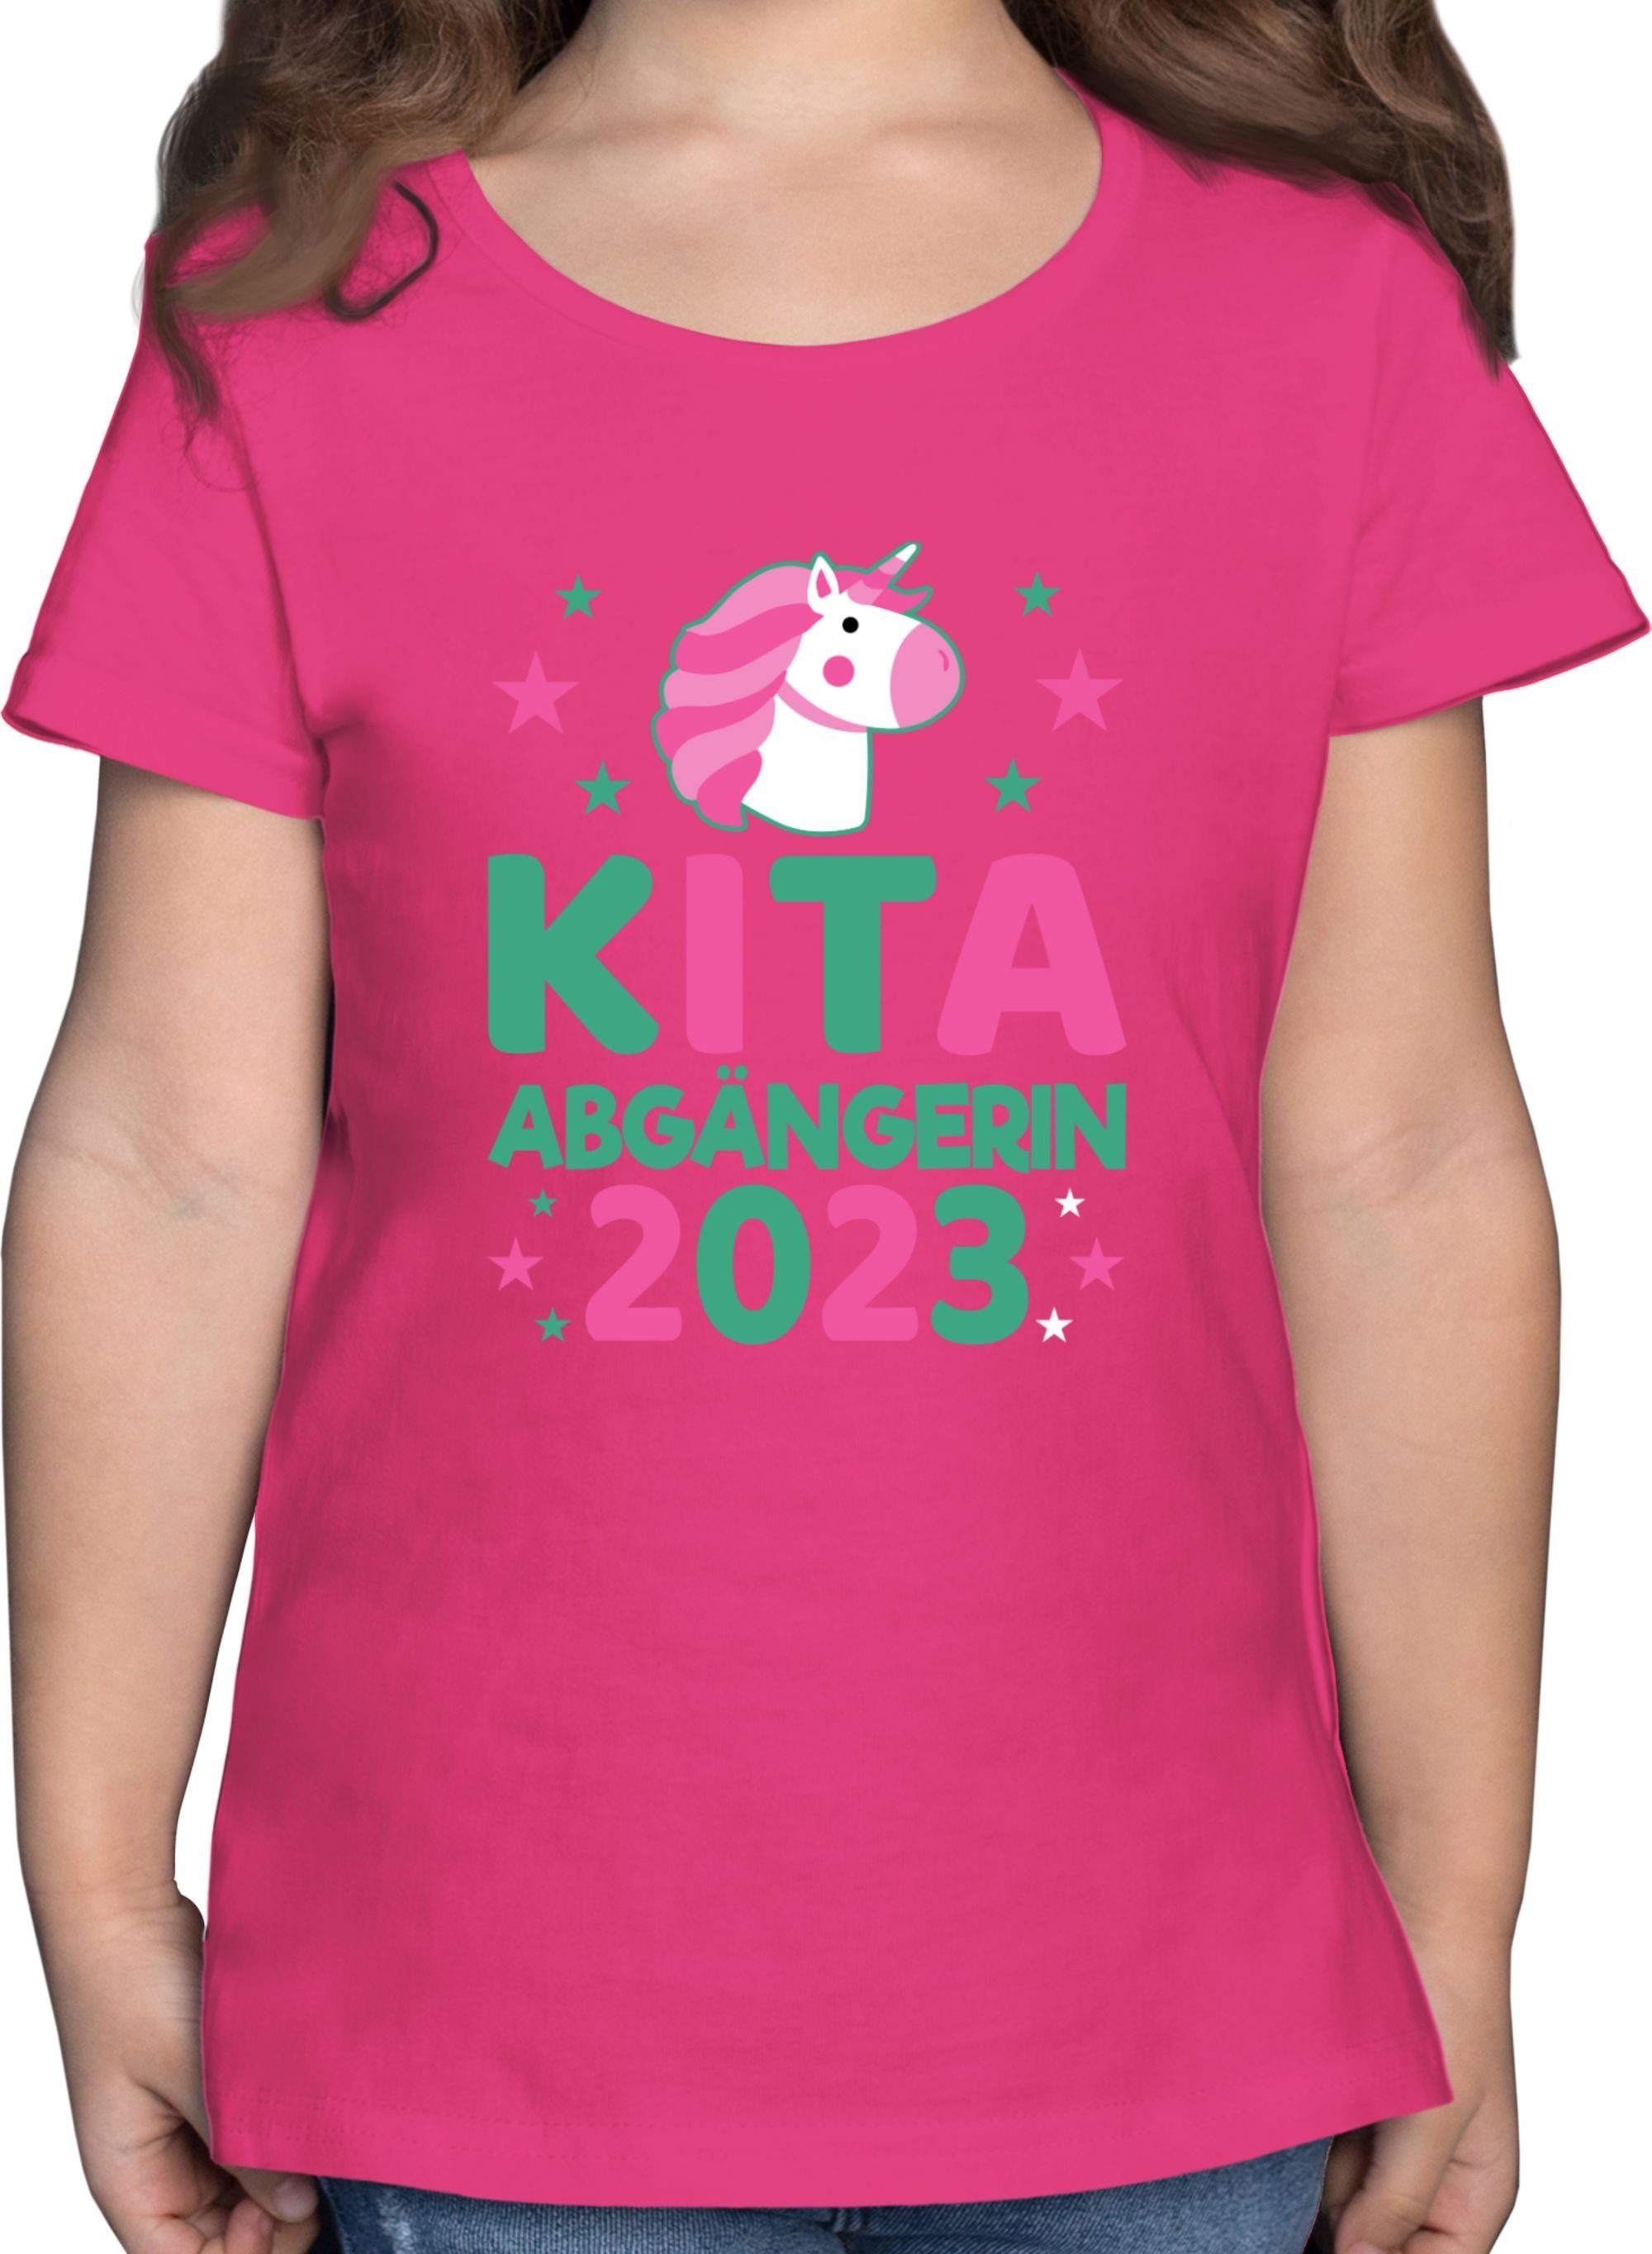 Shirtracer T-Shirt Kita Abgängerin 2023 rosa/türkis Einhorn Sterne Einschulung Mädchen 2 Fuchsia